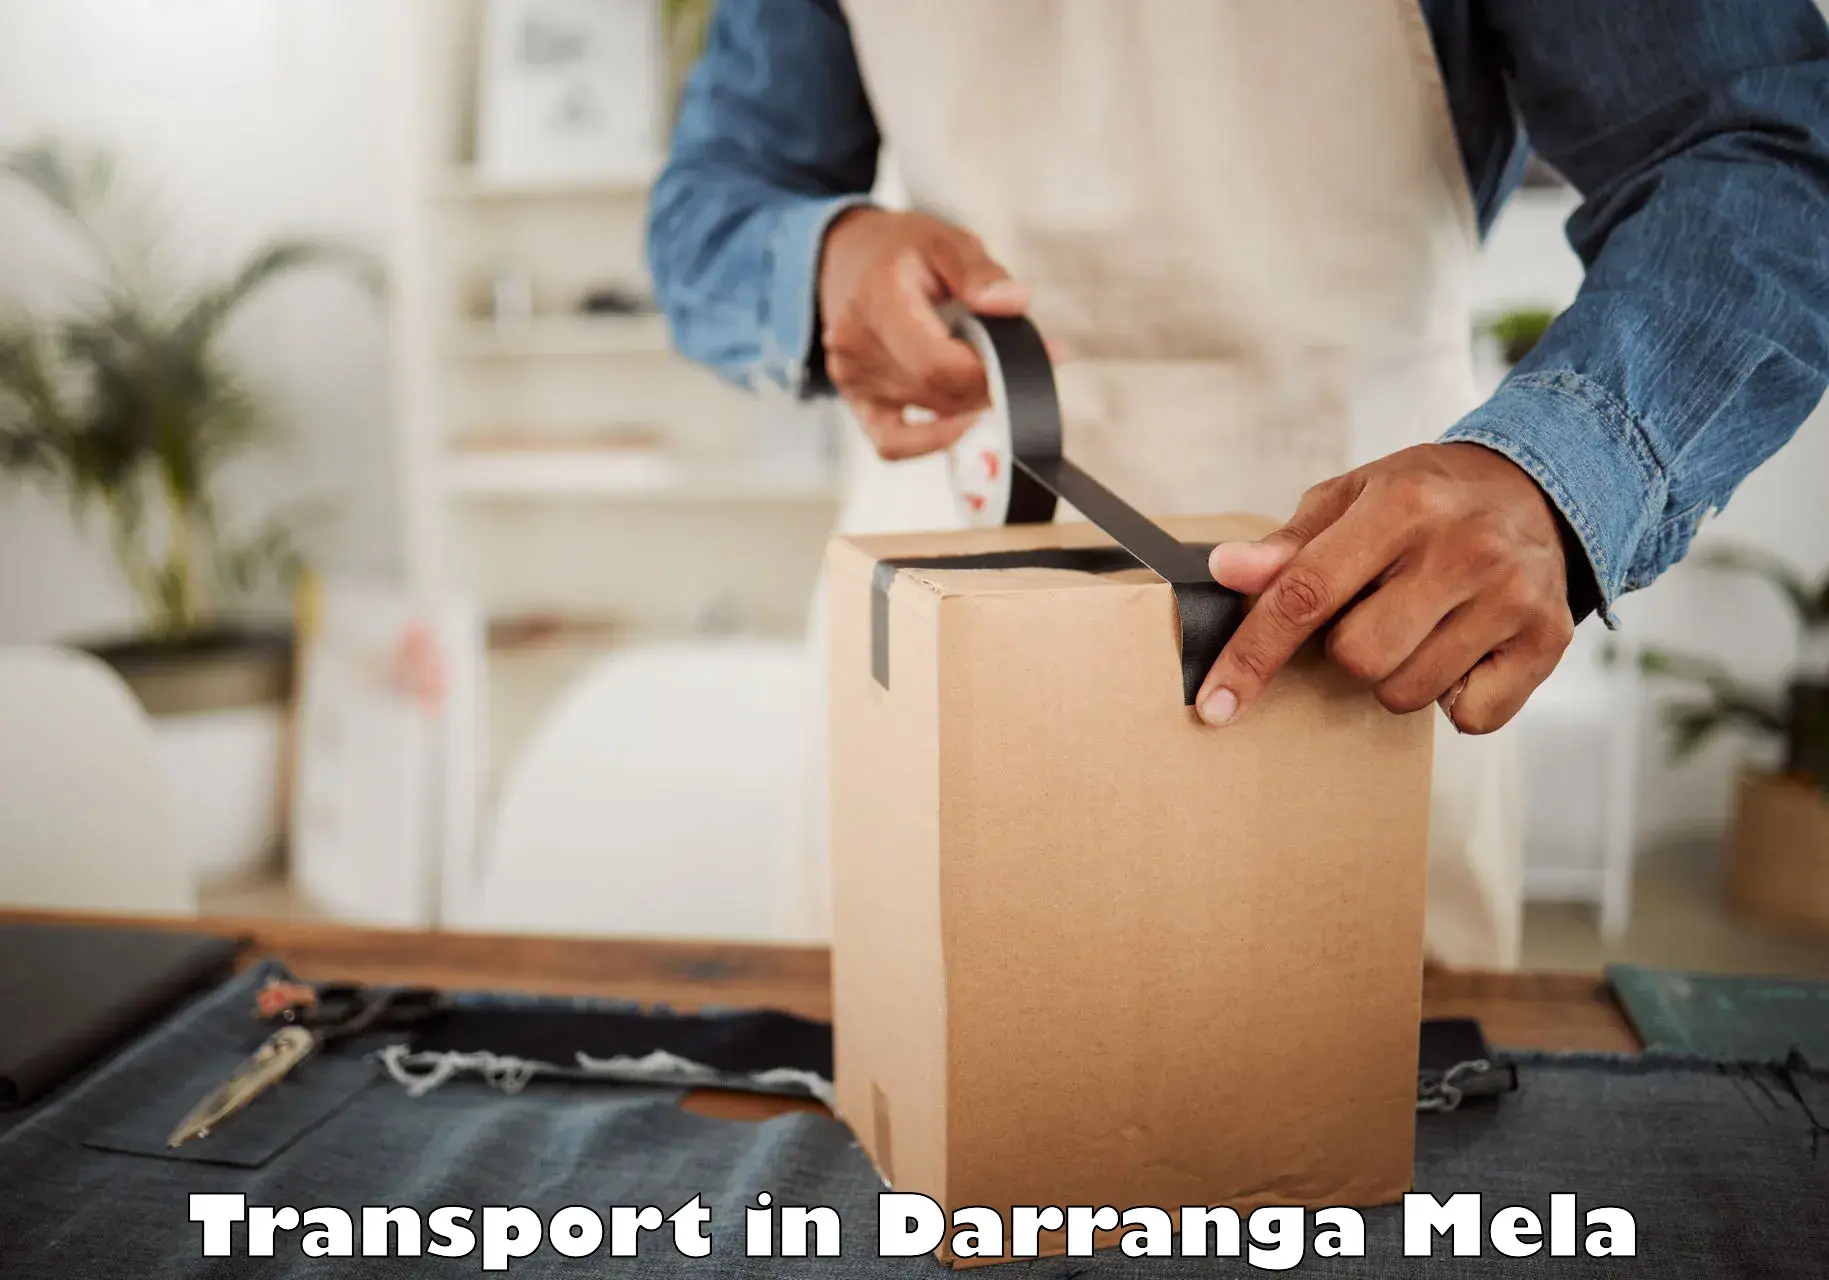 Goods delivery service in Darranga Mela